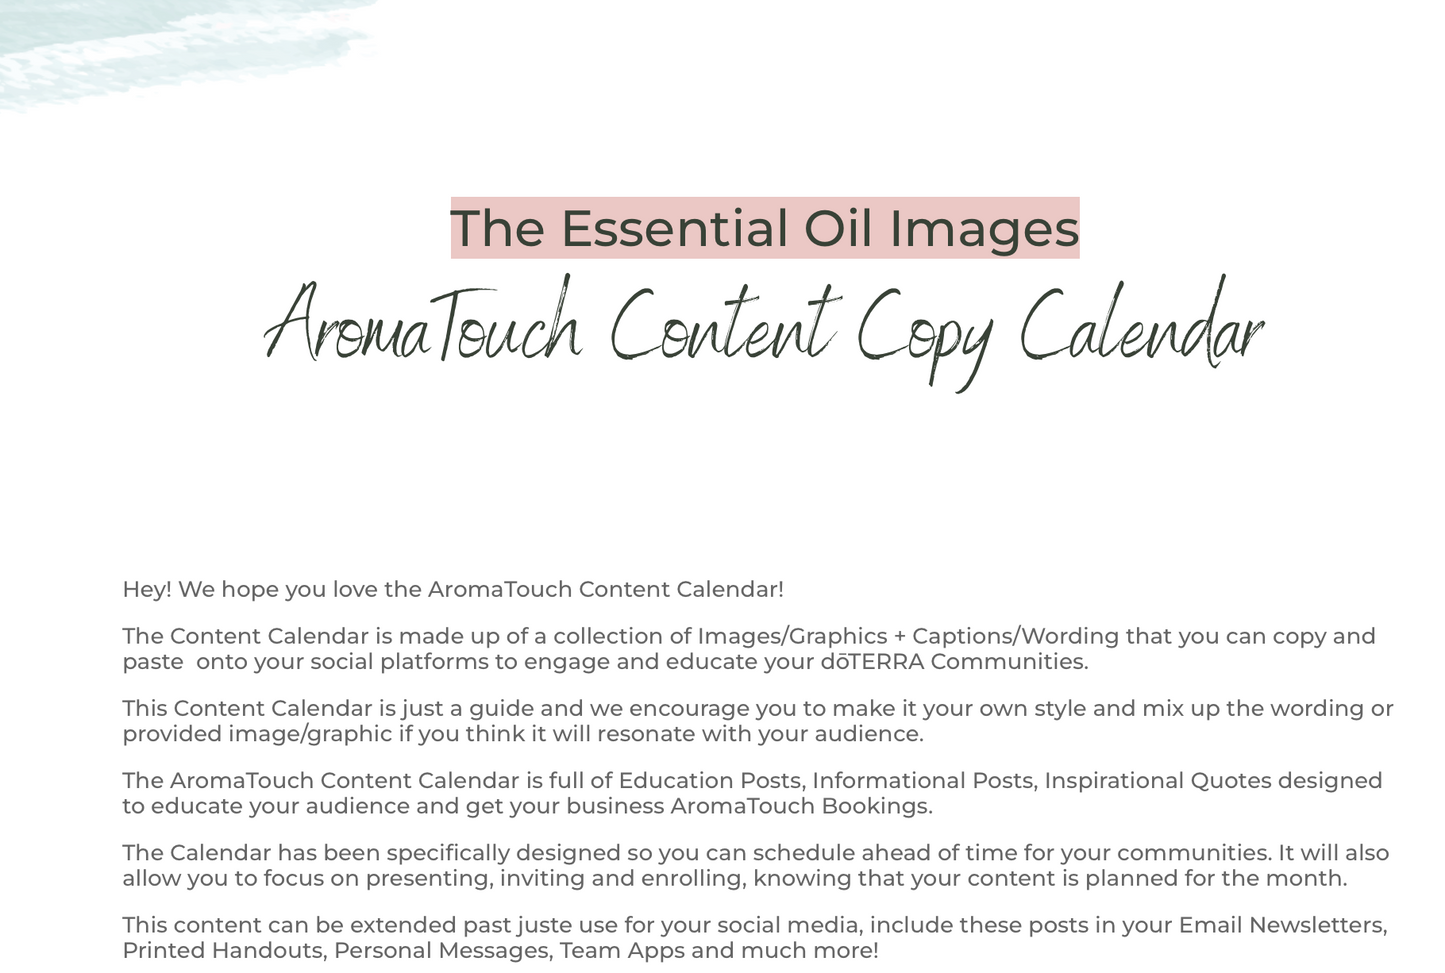 NEW Editable Content Calendar - The AromaTouch Technique